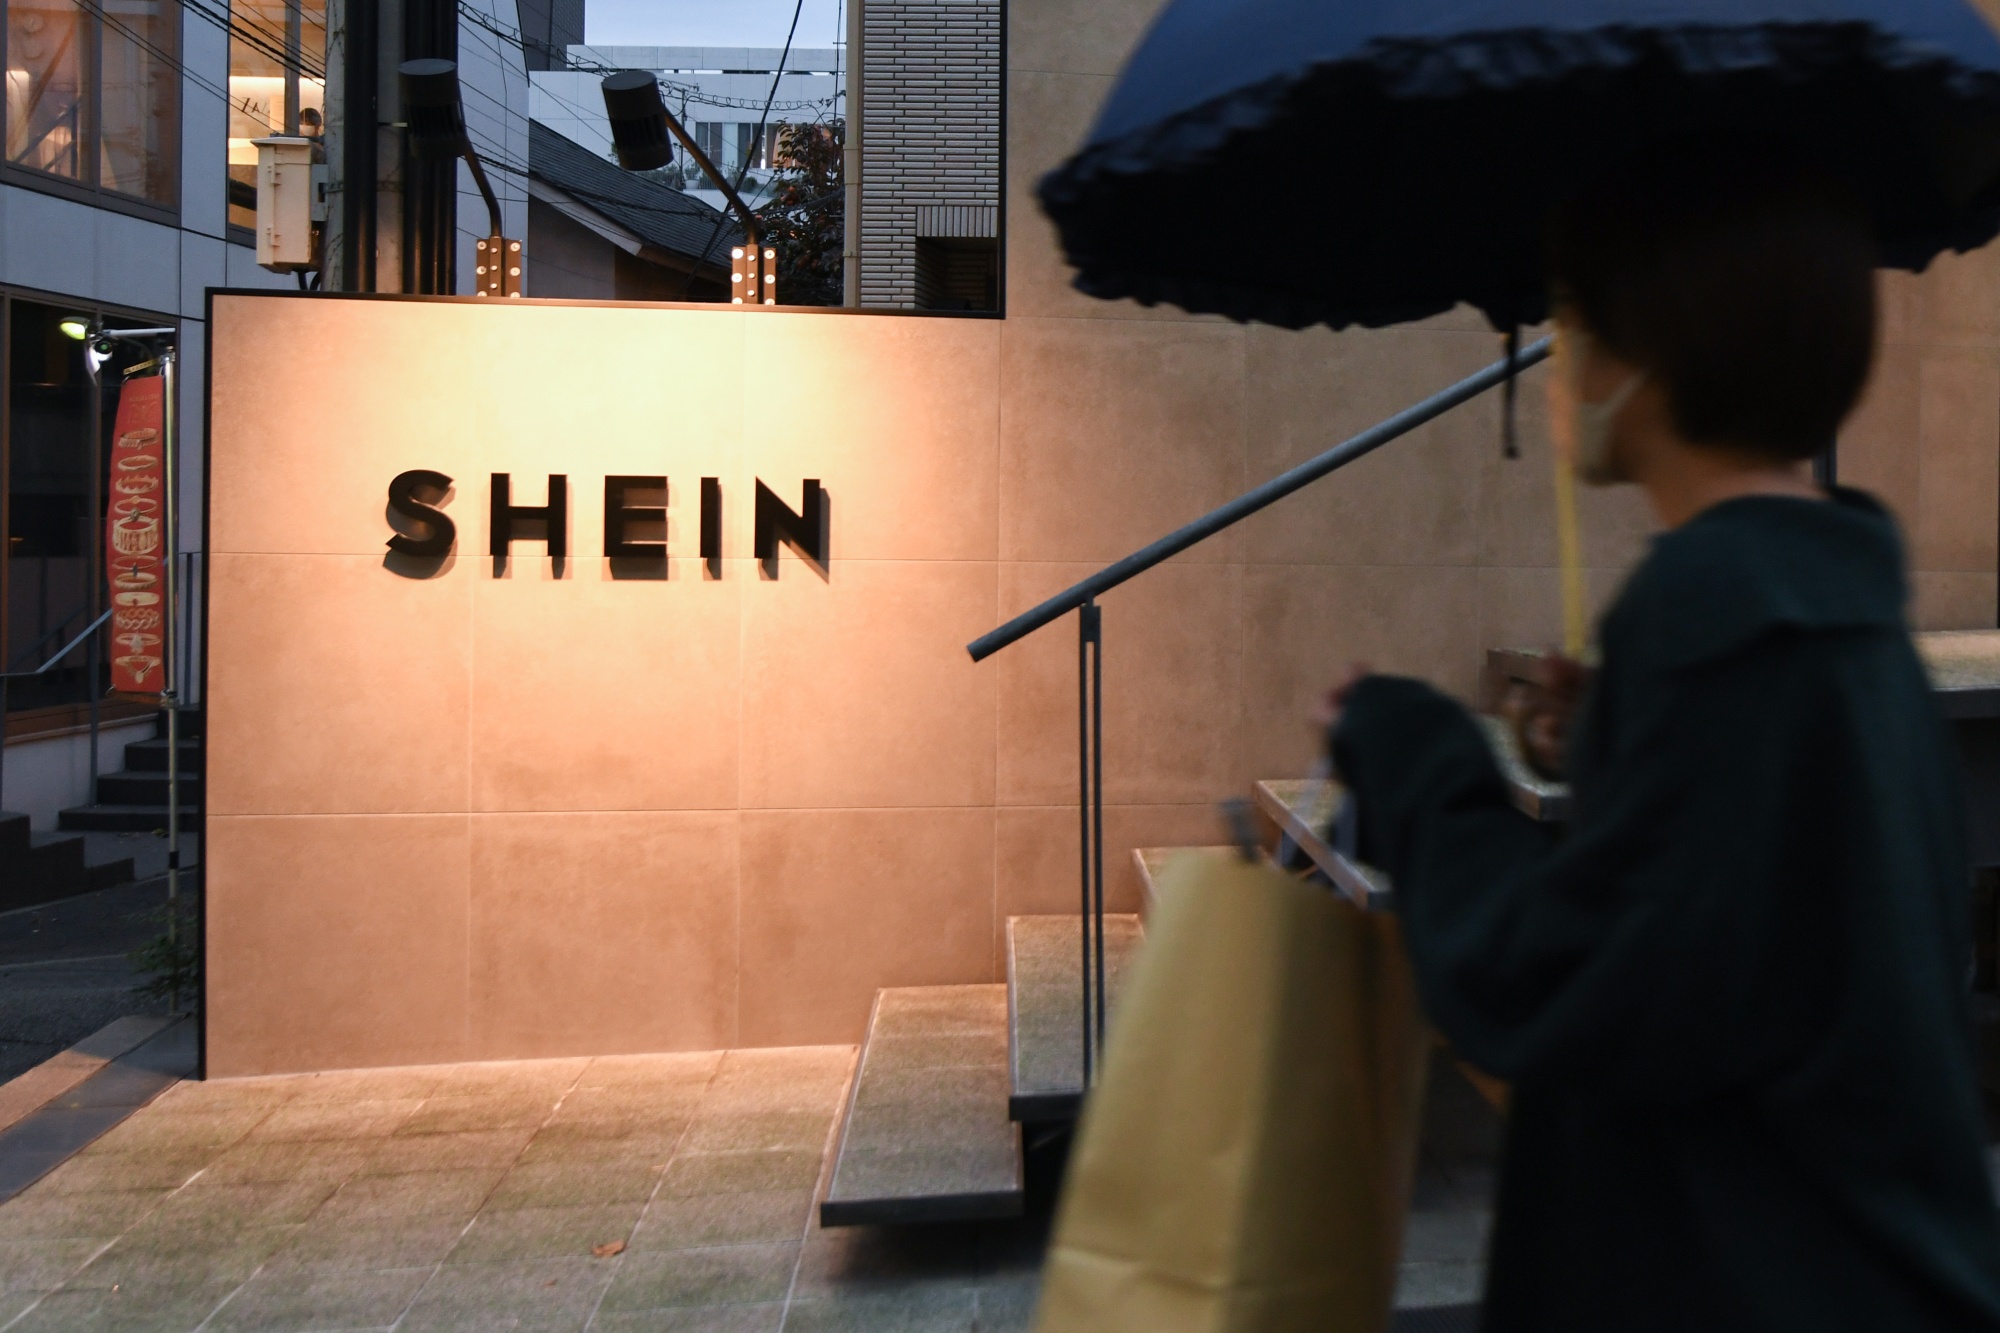 Ultra-fast fashion giant Shein accused of copying Zara designs